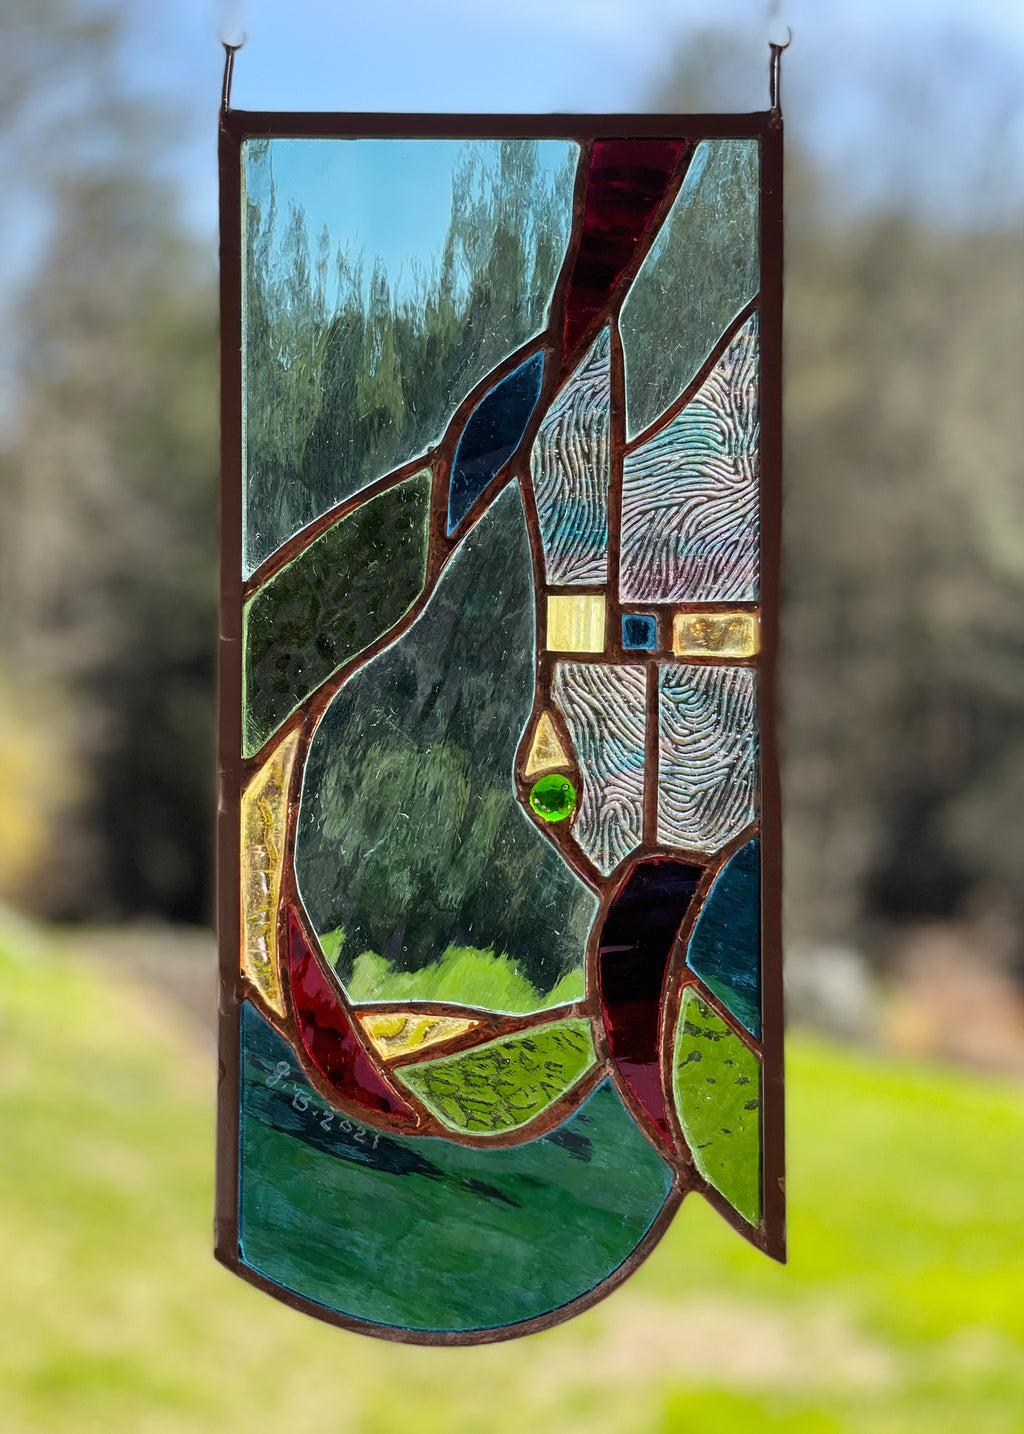 Small organic panel made by Vermont artist Julia Brandis. Organic abstract.